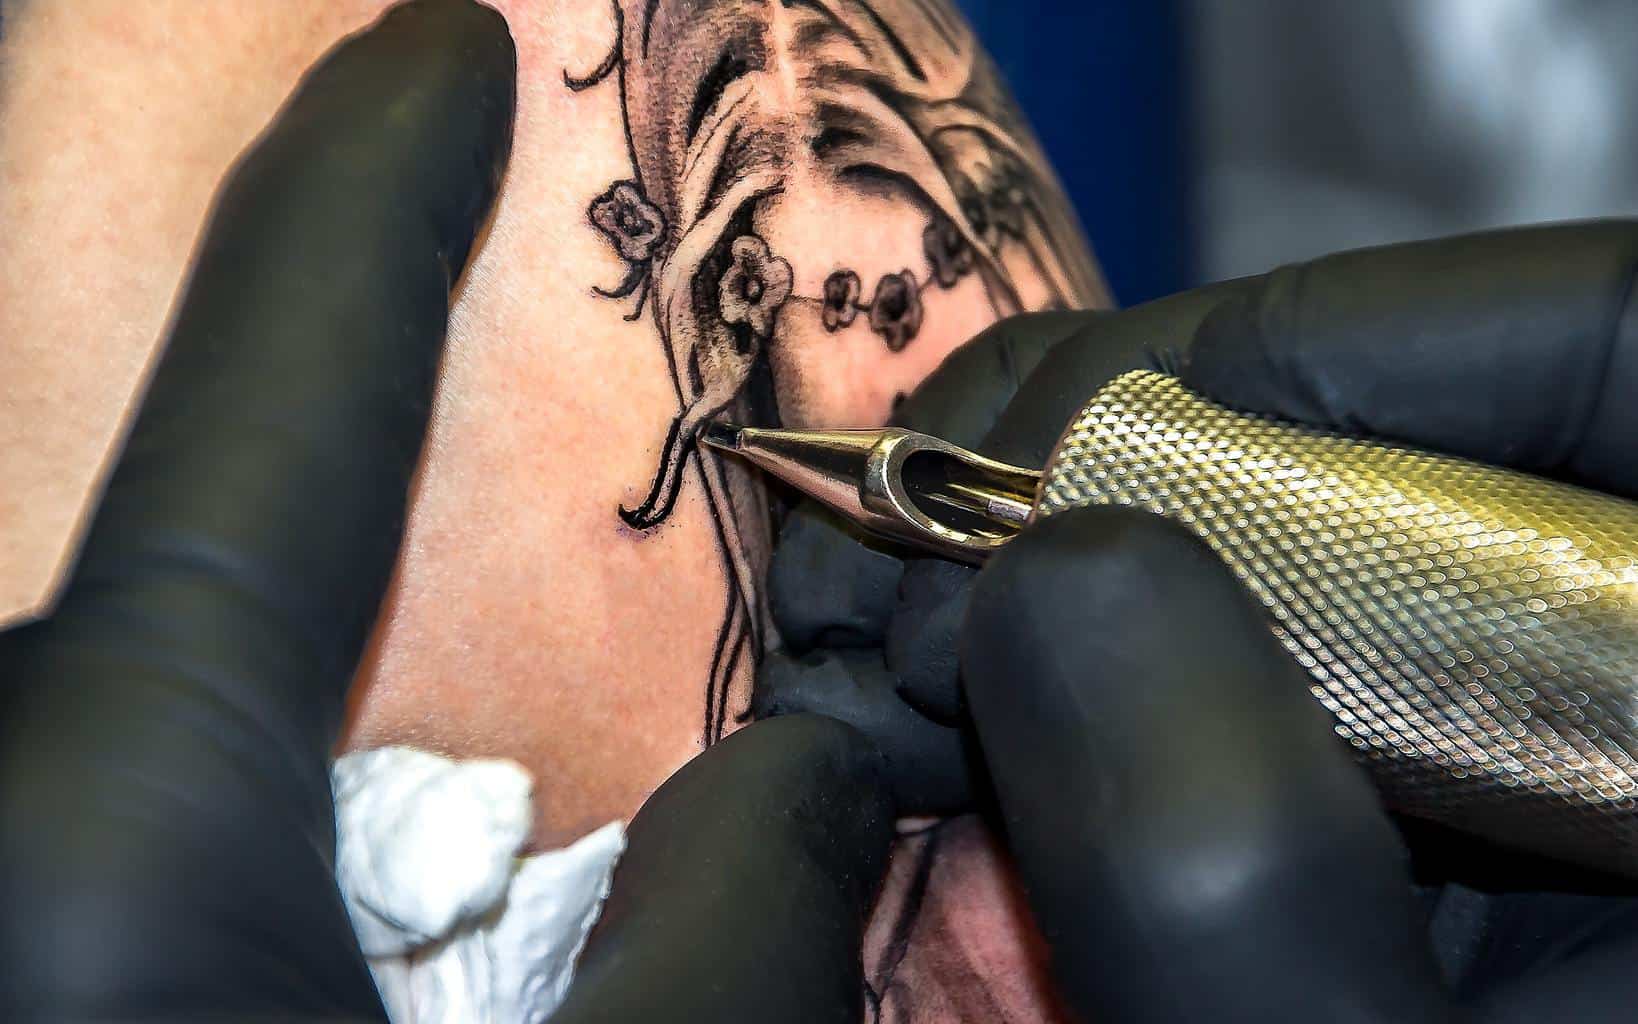 Is tattoo really hurts? - Gargoyle Tattoo Auckland